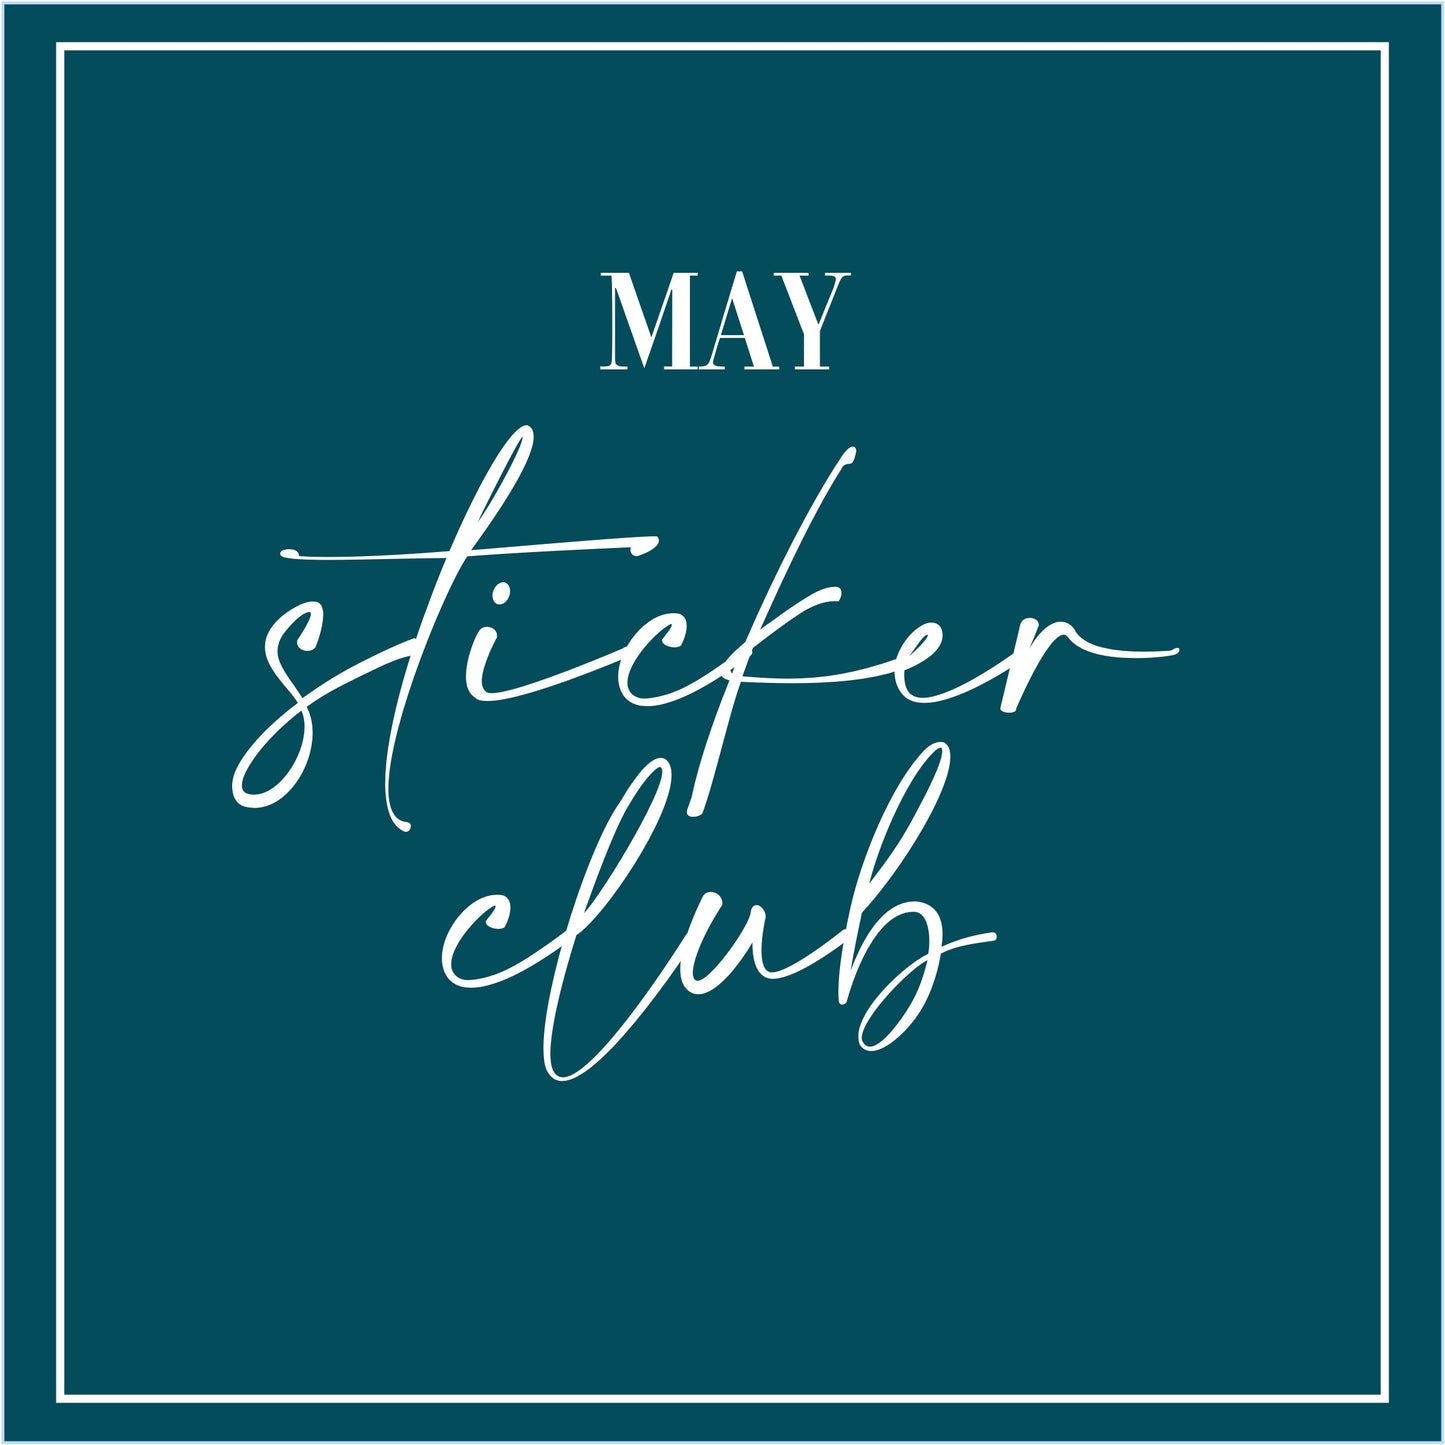 May - Sticker Club